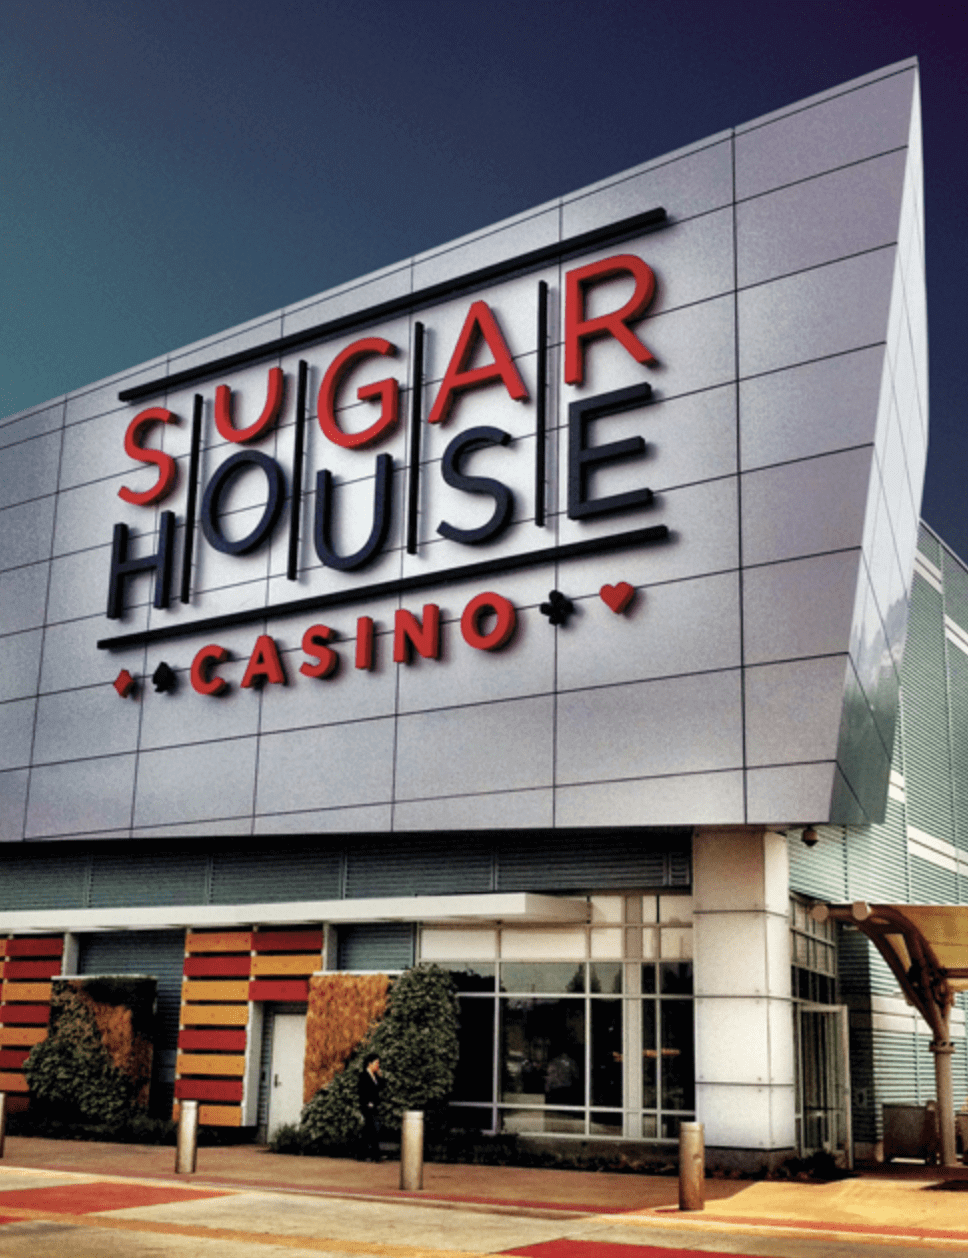 security for sugarhouse casino in philadelphia